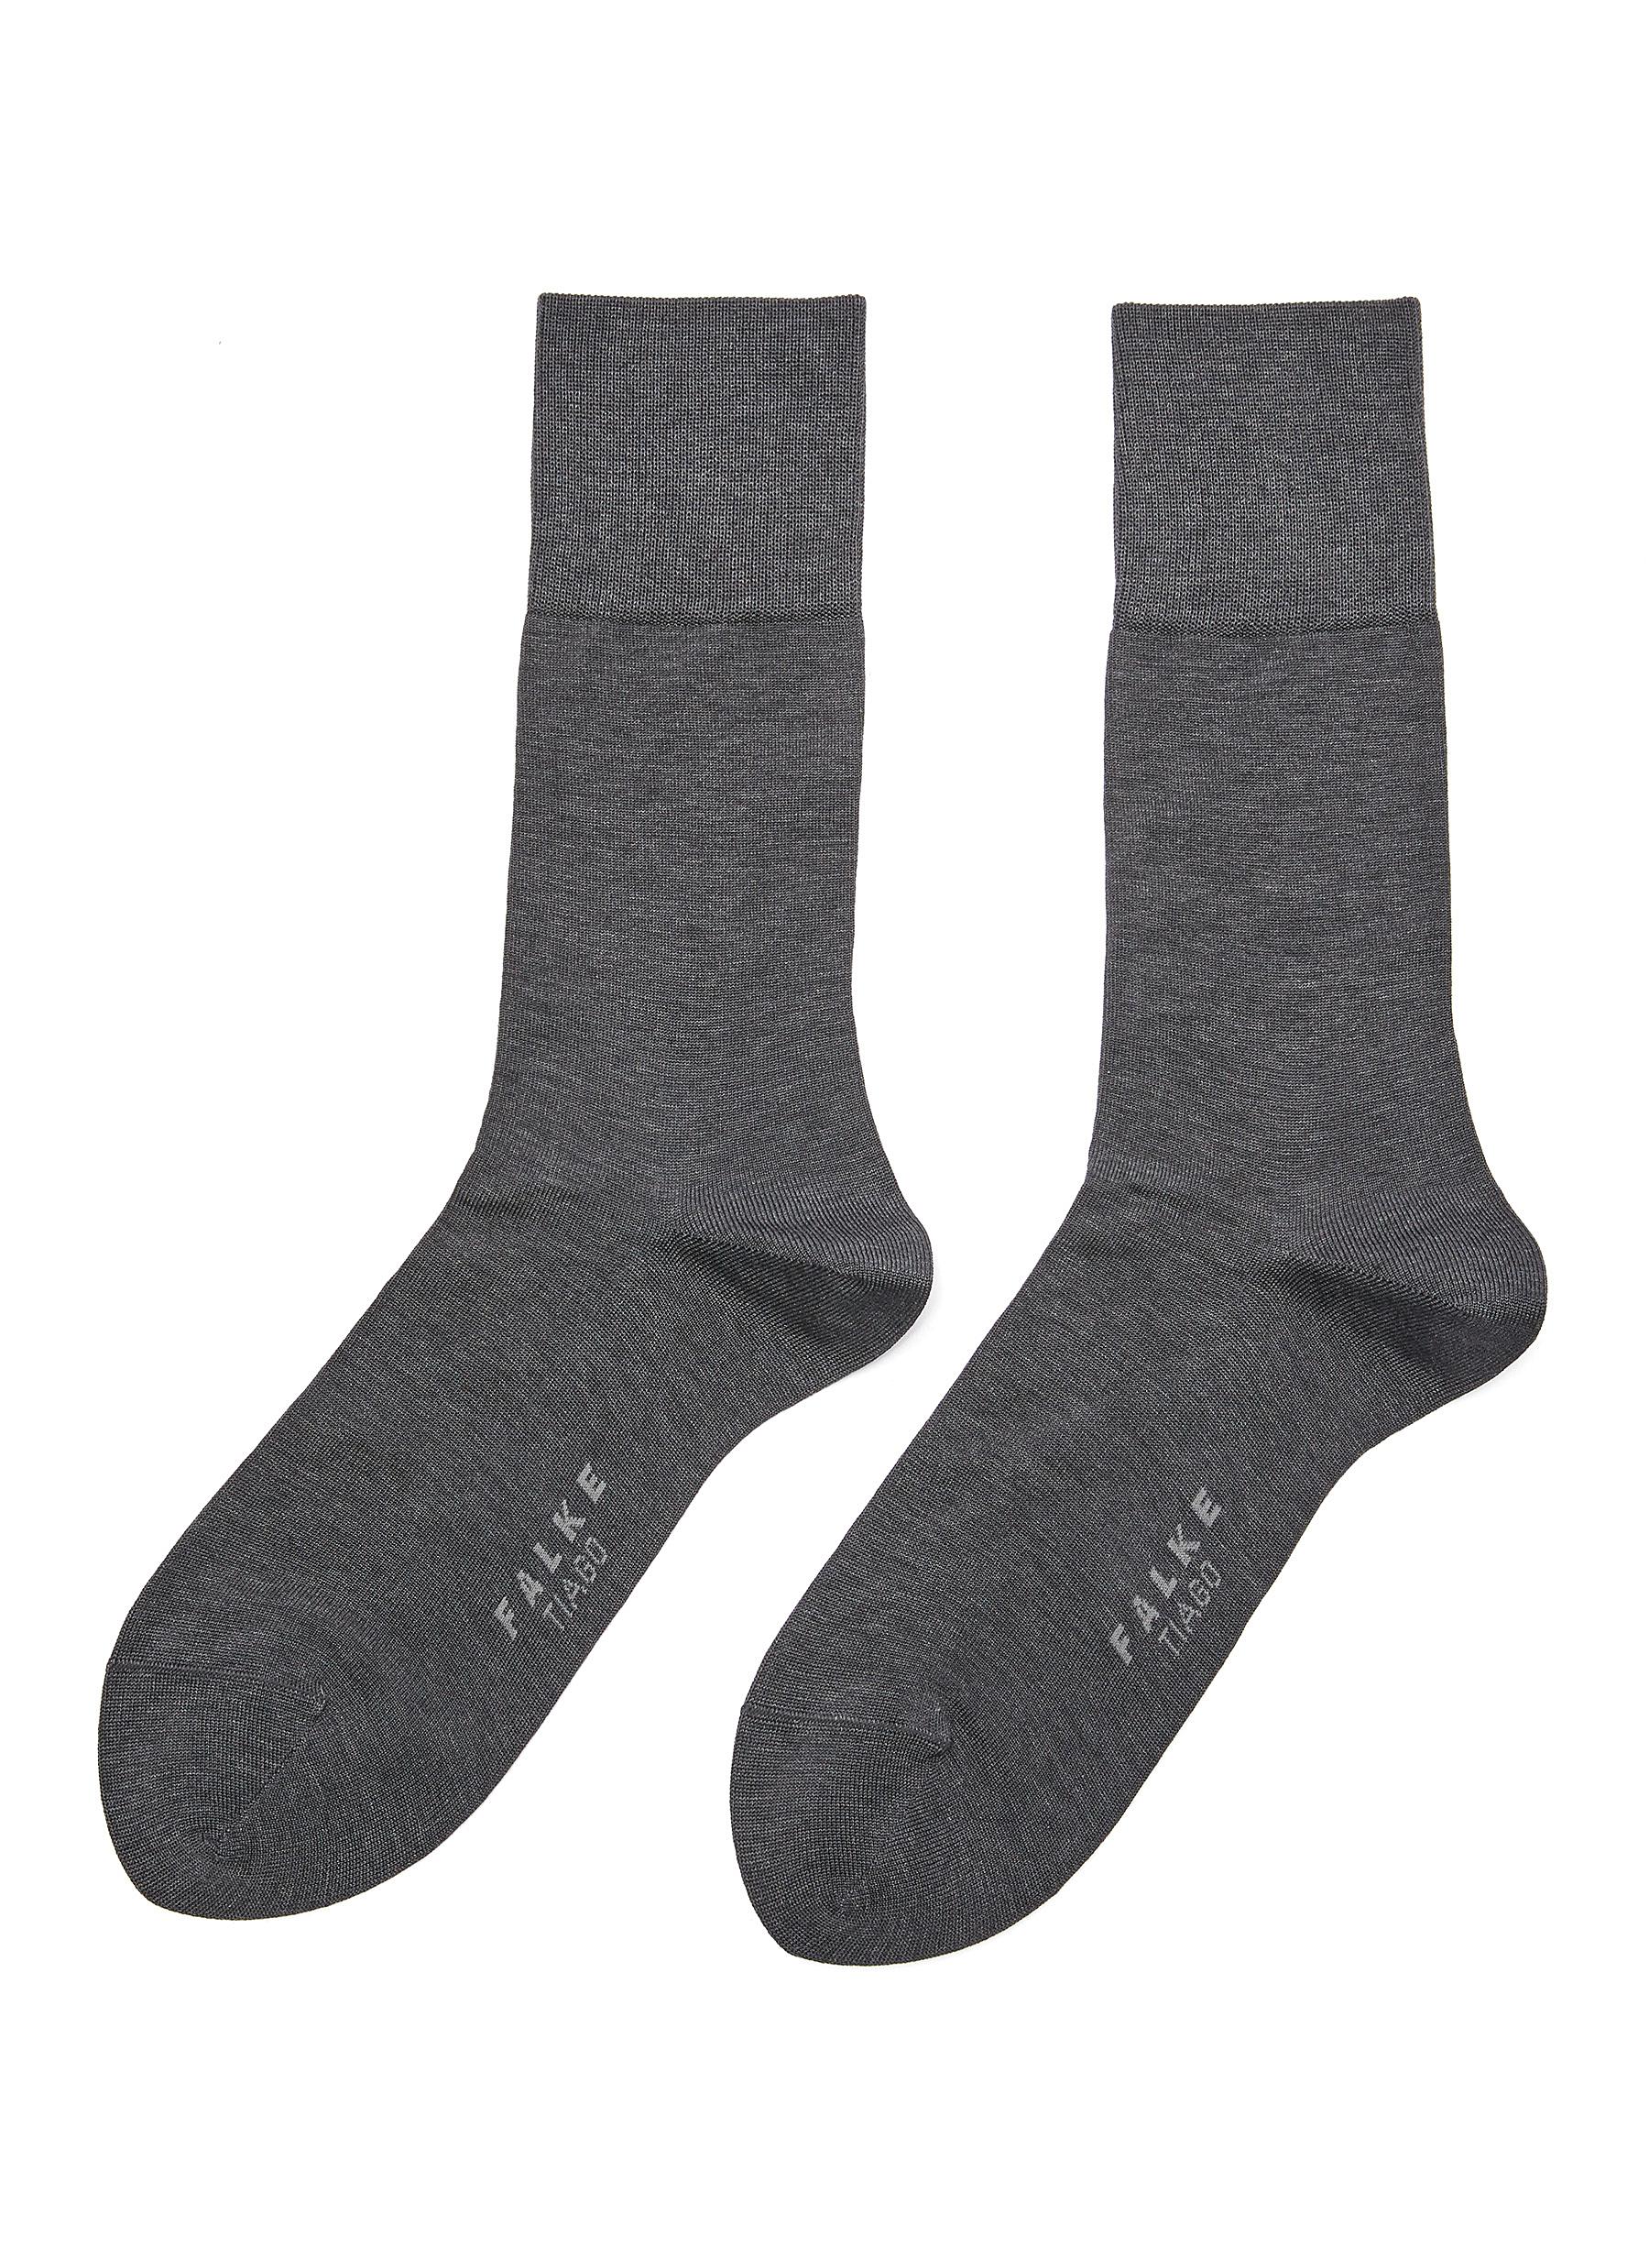 Tiago’ cotton socks